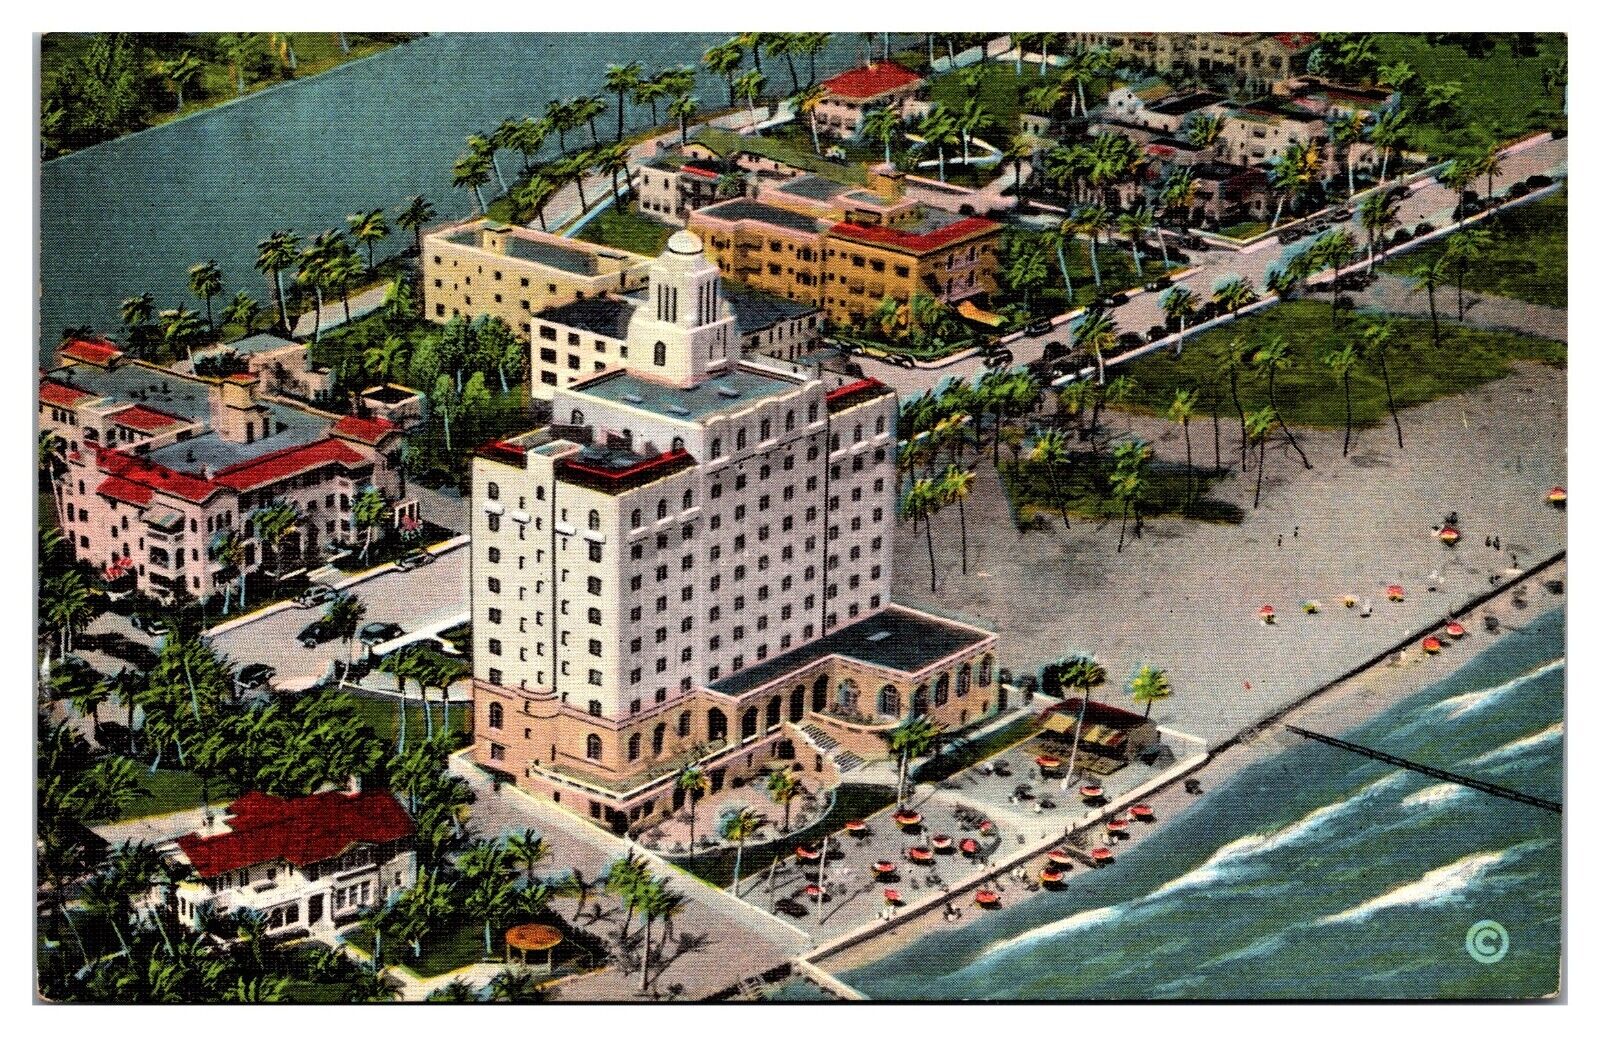 VTG Whitman Hotel, Aerial Exterior View, Beach, Palm Trees, Miami, FL